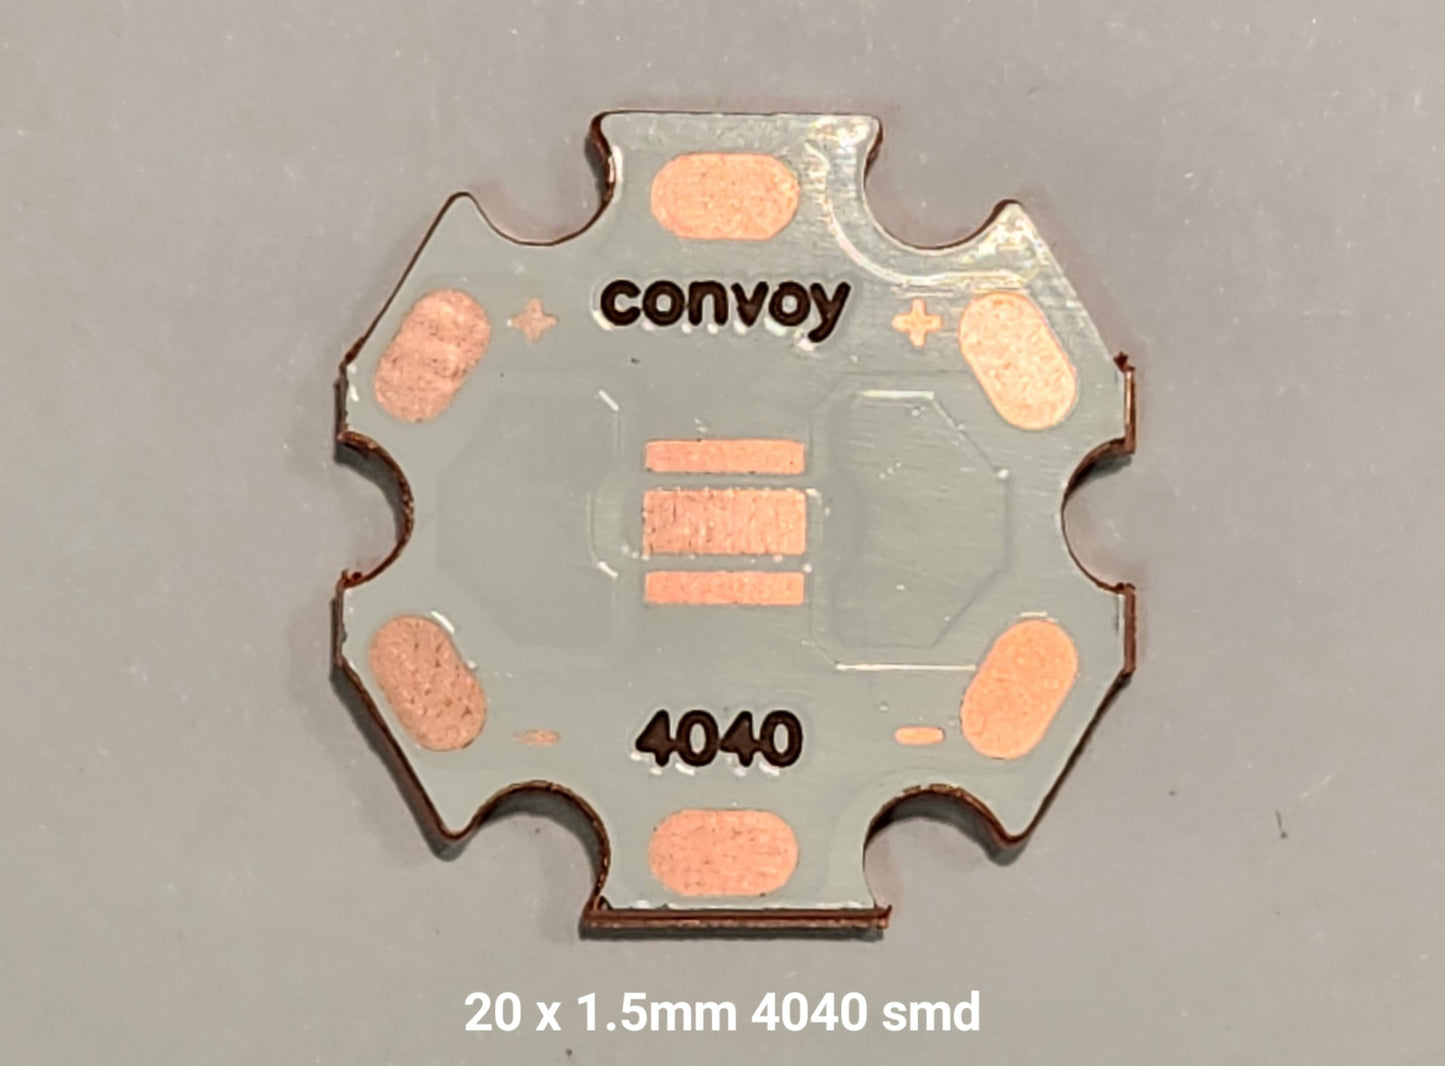 CONVOY RAW LED MCPCB 20 X 1.5MM 4040 SMD